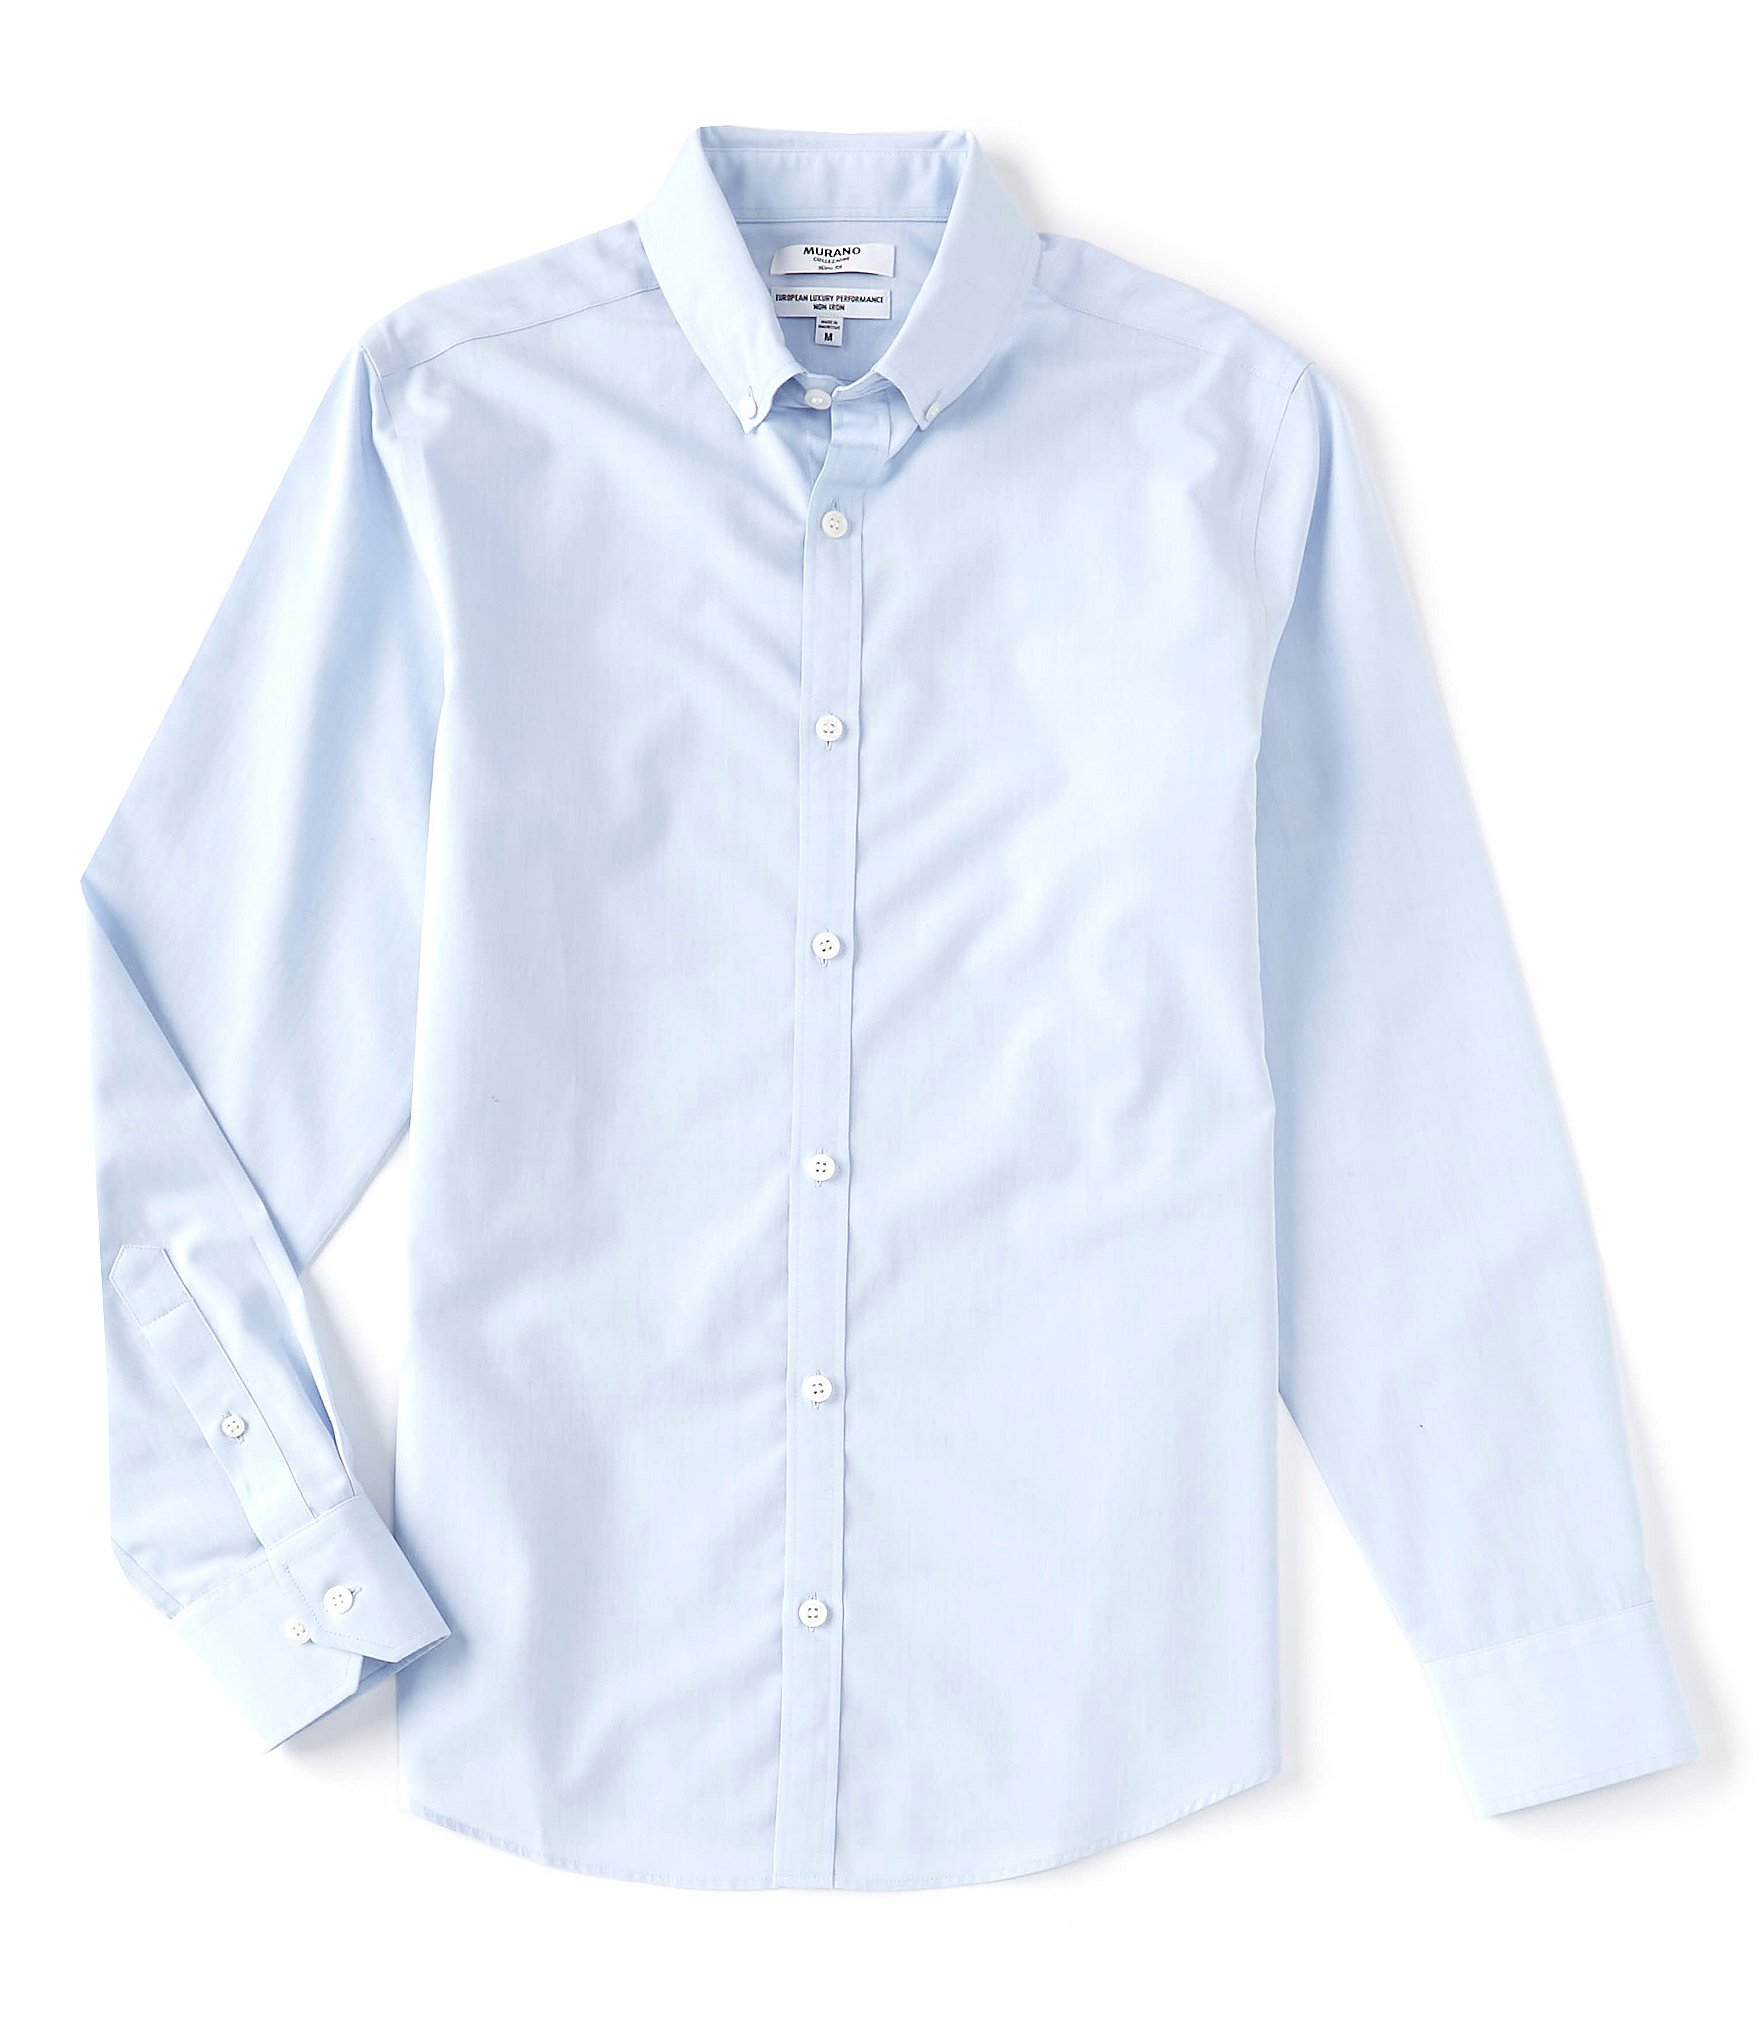 Murano Slim-Fit Solid Long-Sleeve Woven Shirt | Dillard's